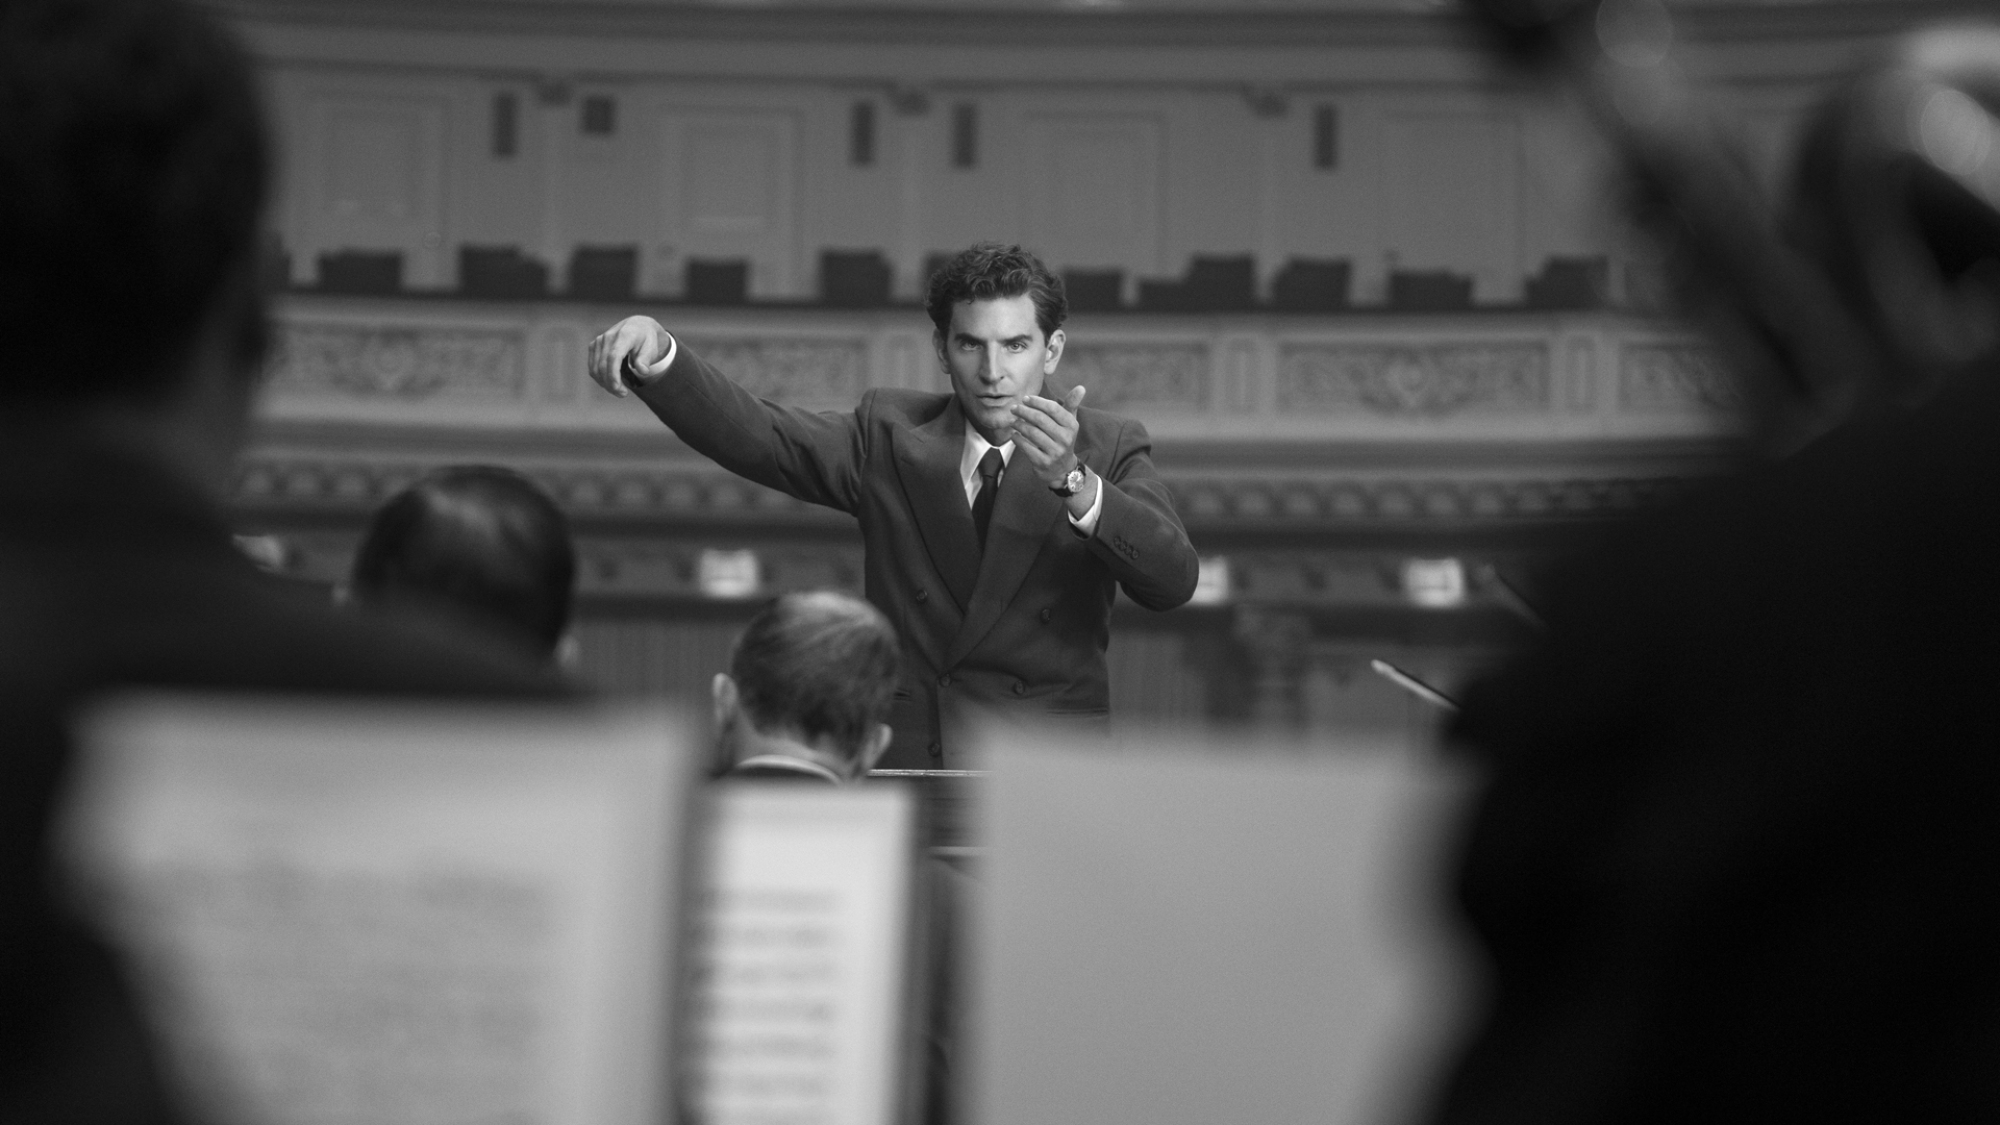 Bradley Cooper incarne Leonard Bernstein, dirigeant un orchestre, dans le film "Maestro"